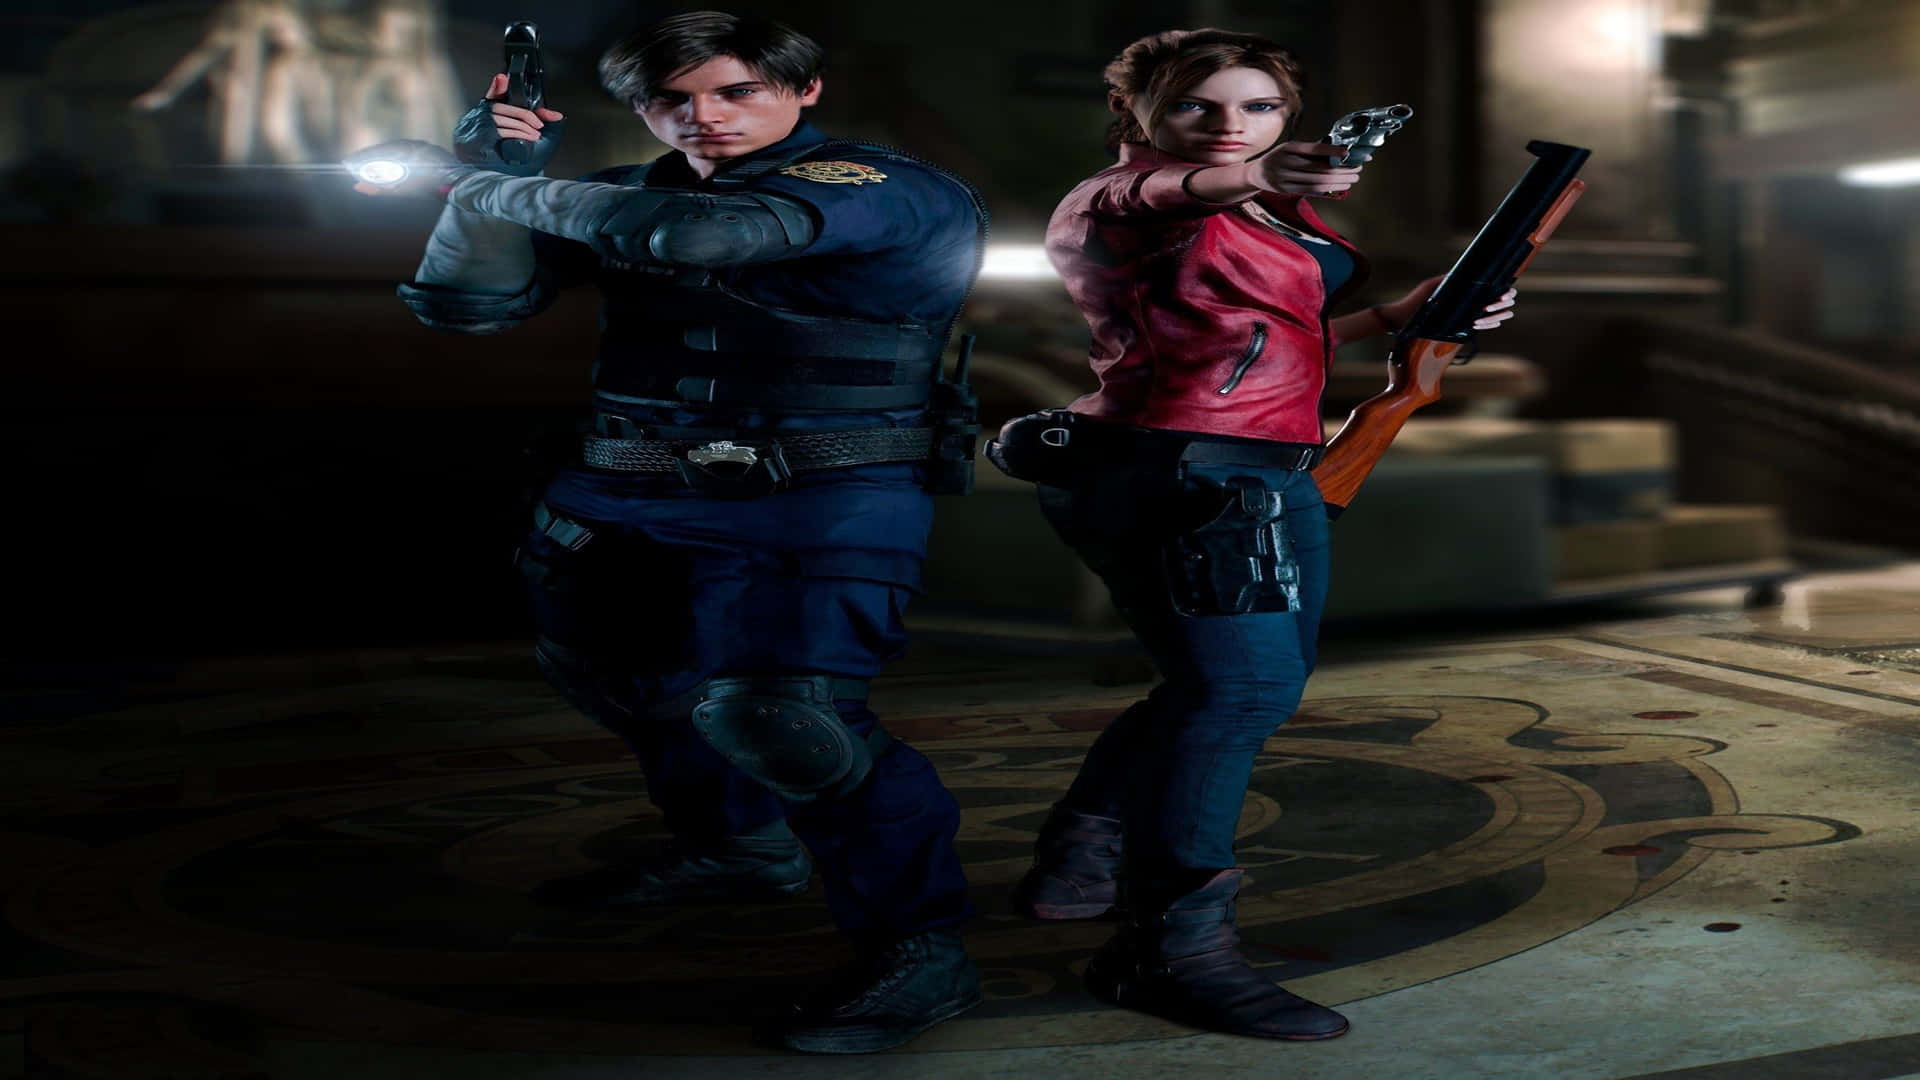 Fondode Pantalla Resident Evil 2 1920x1080 De Leon Y Claire Armados